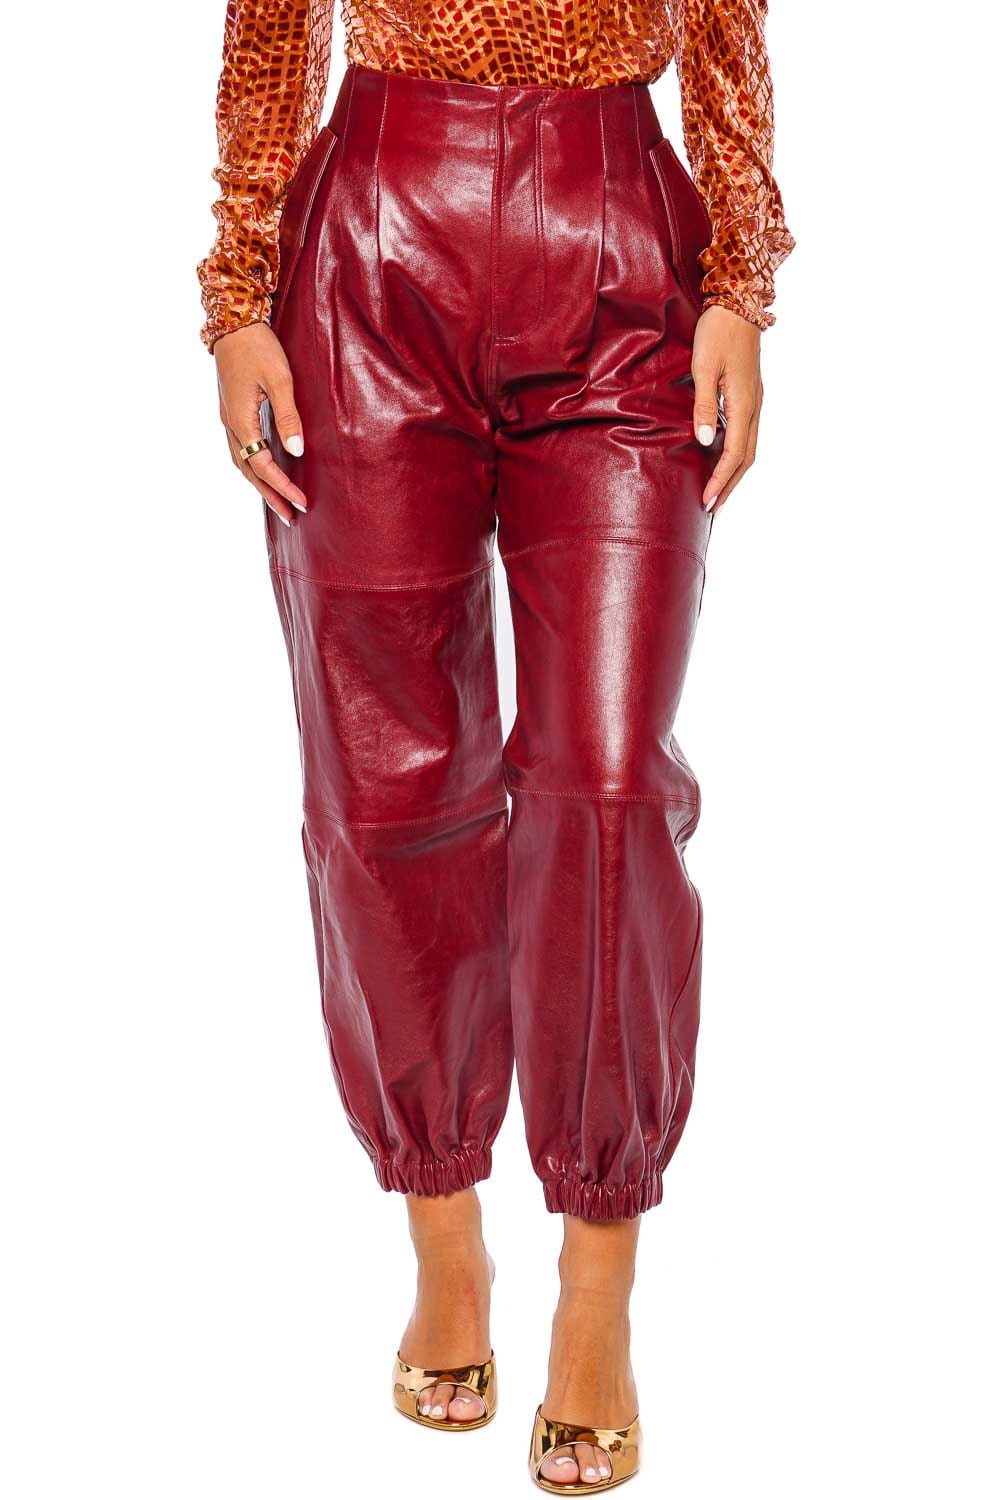 Lola Red Leather Leggings